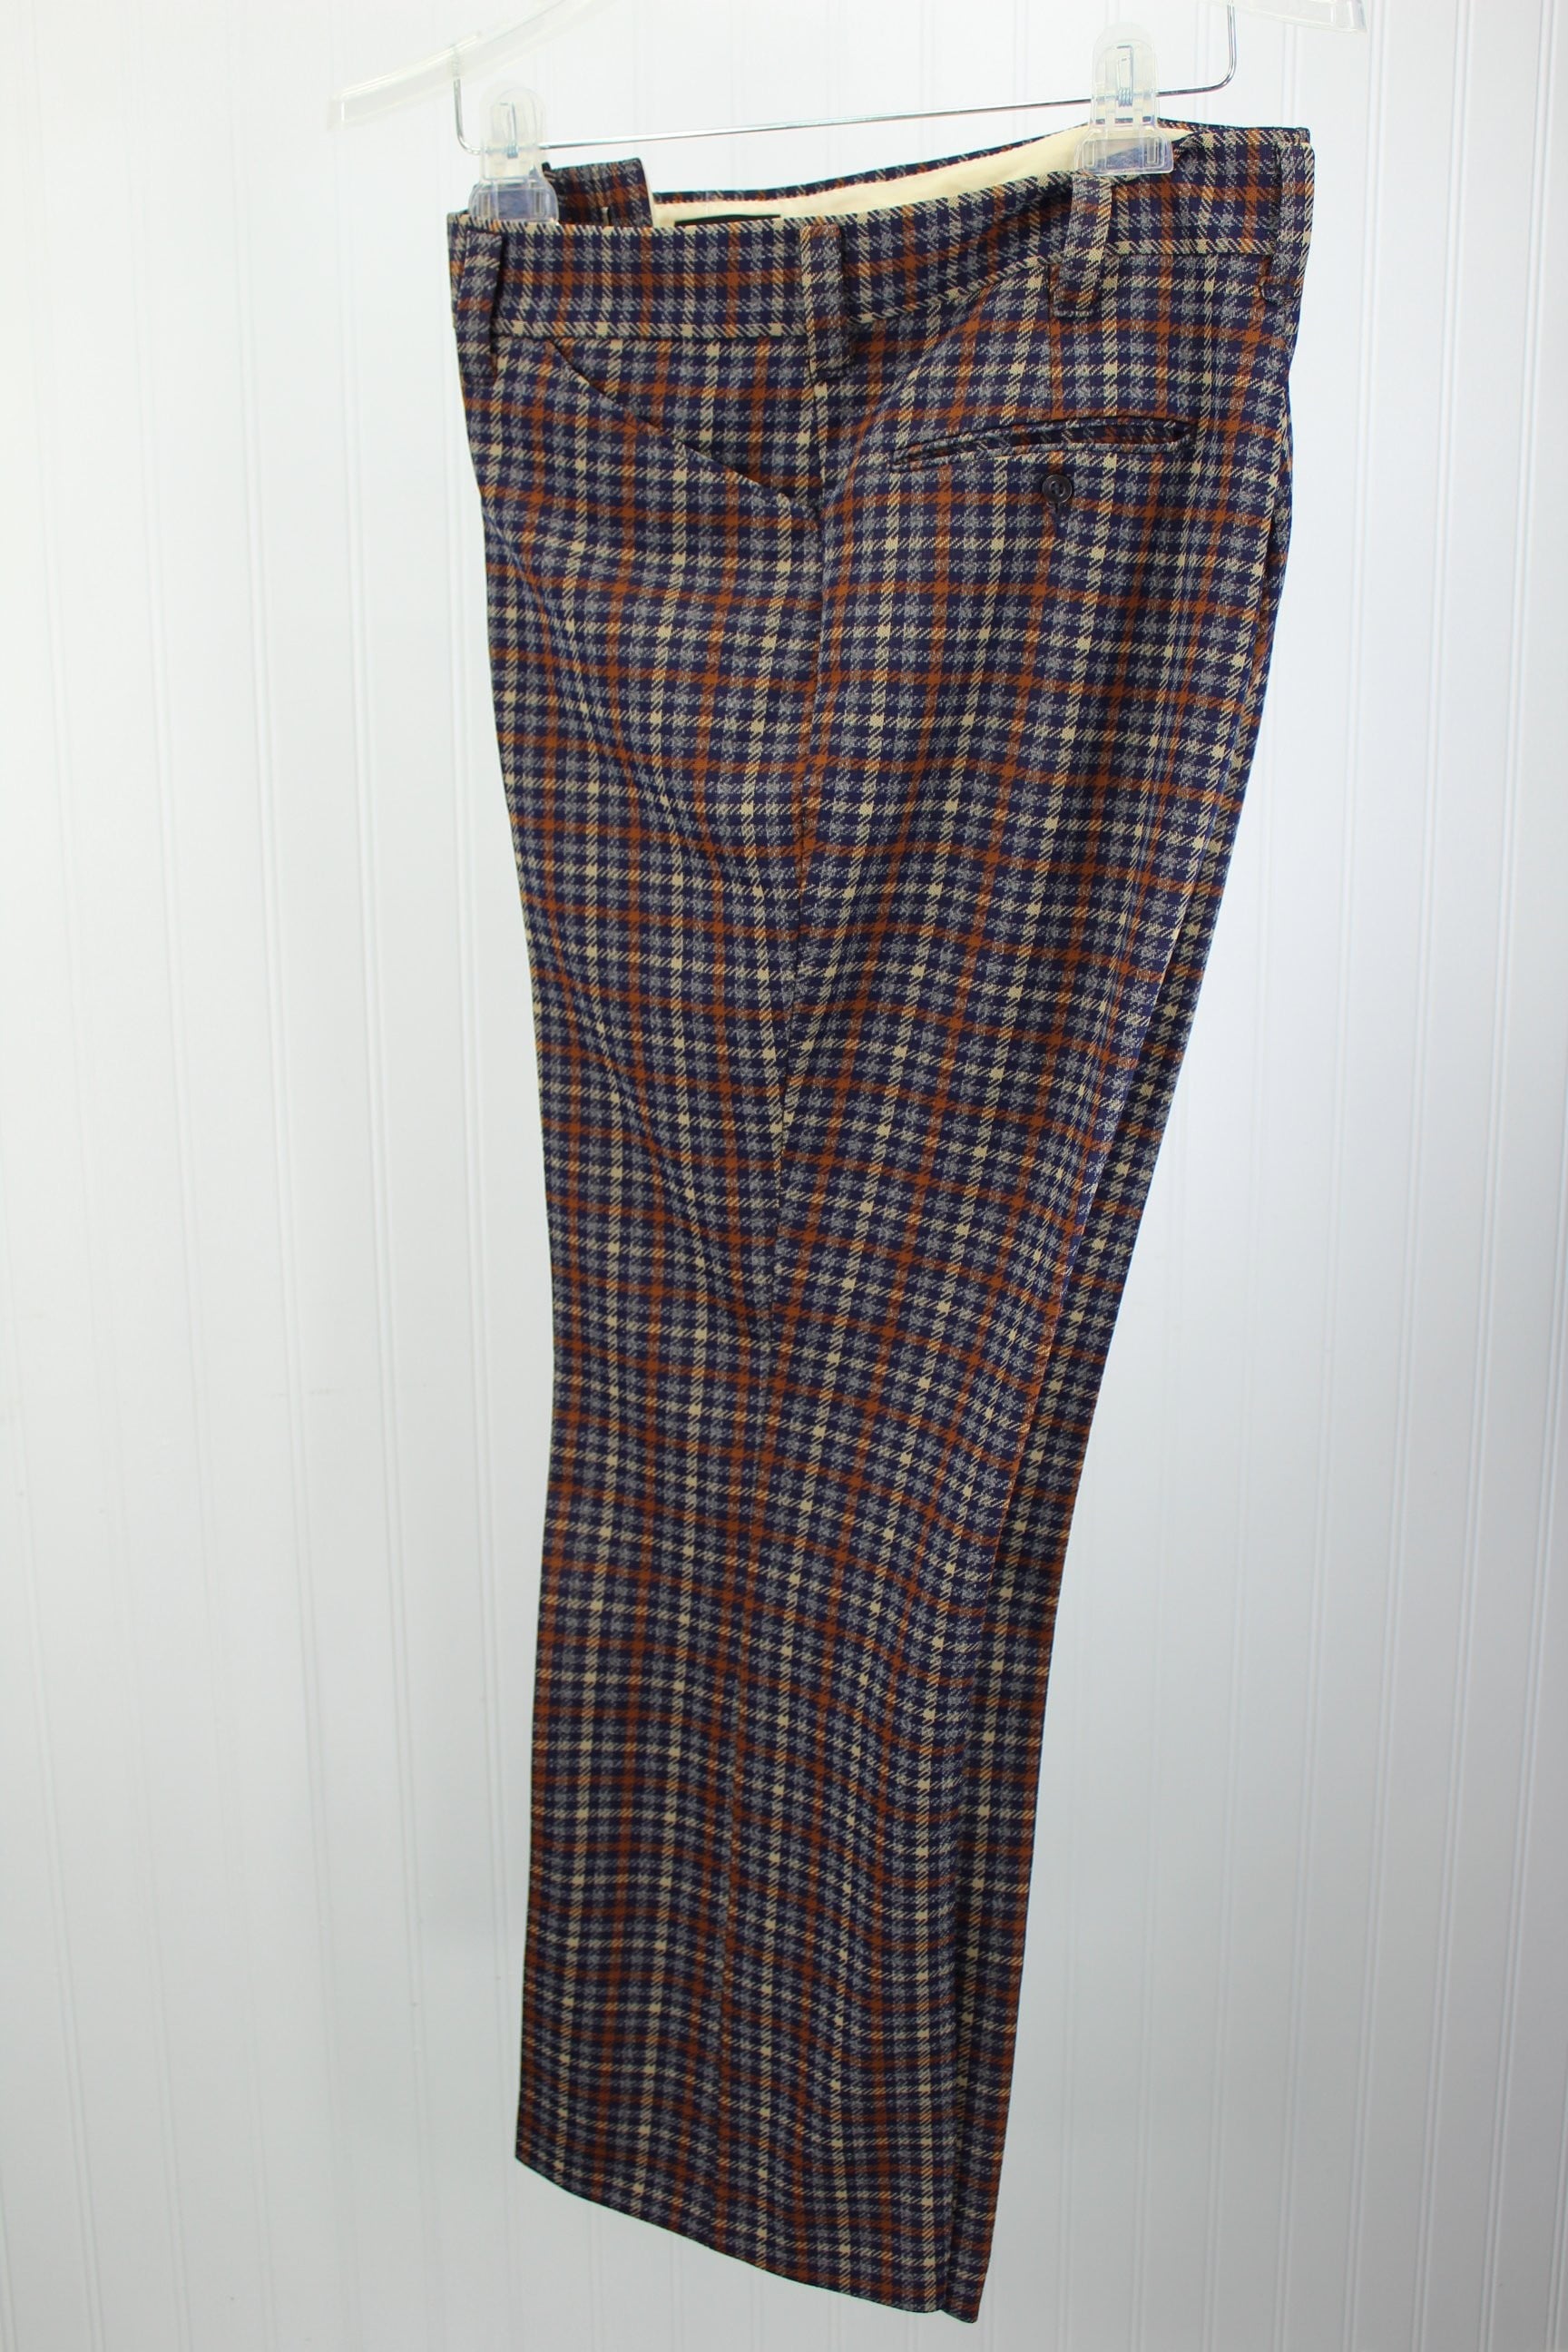 Puritan Men's Pants Trousers Vintage 1960s Blue Rust Houndstooth True Retro permanent crease wrinkle free